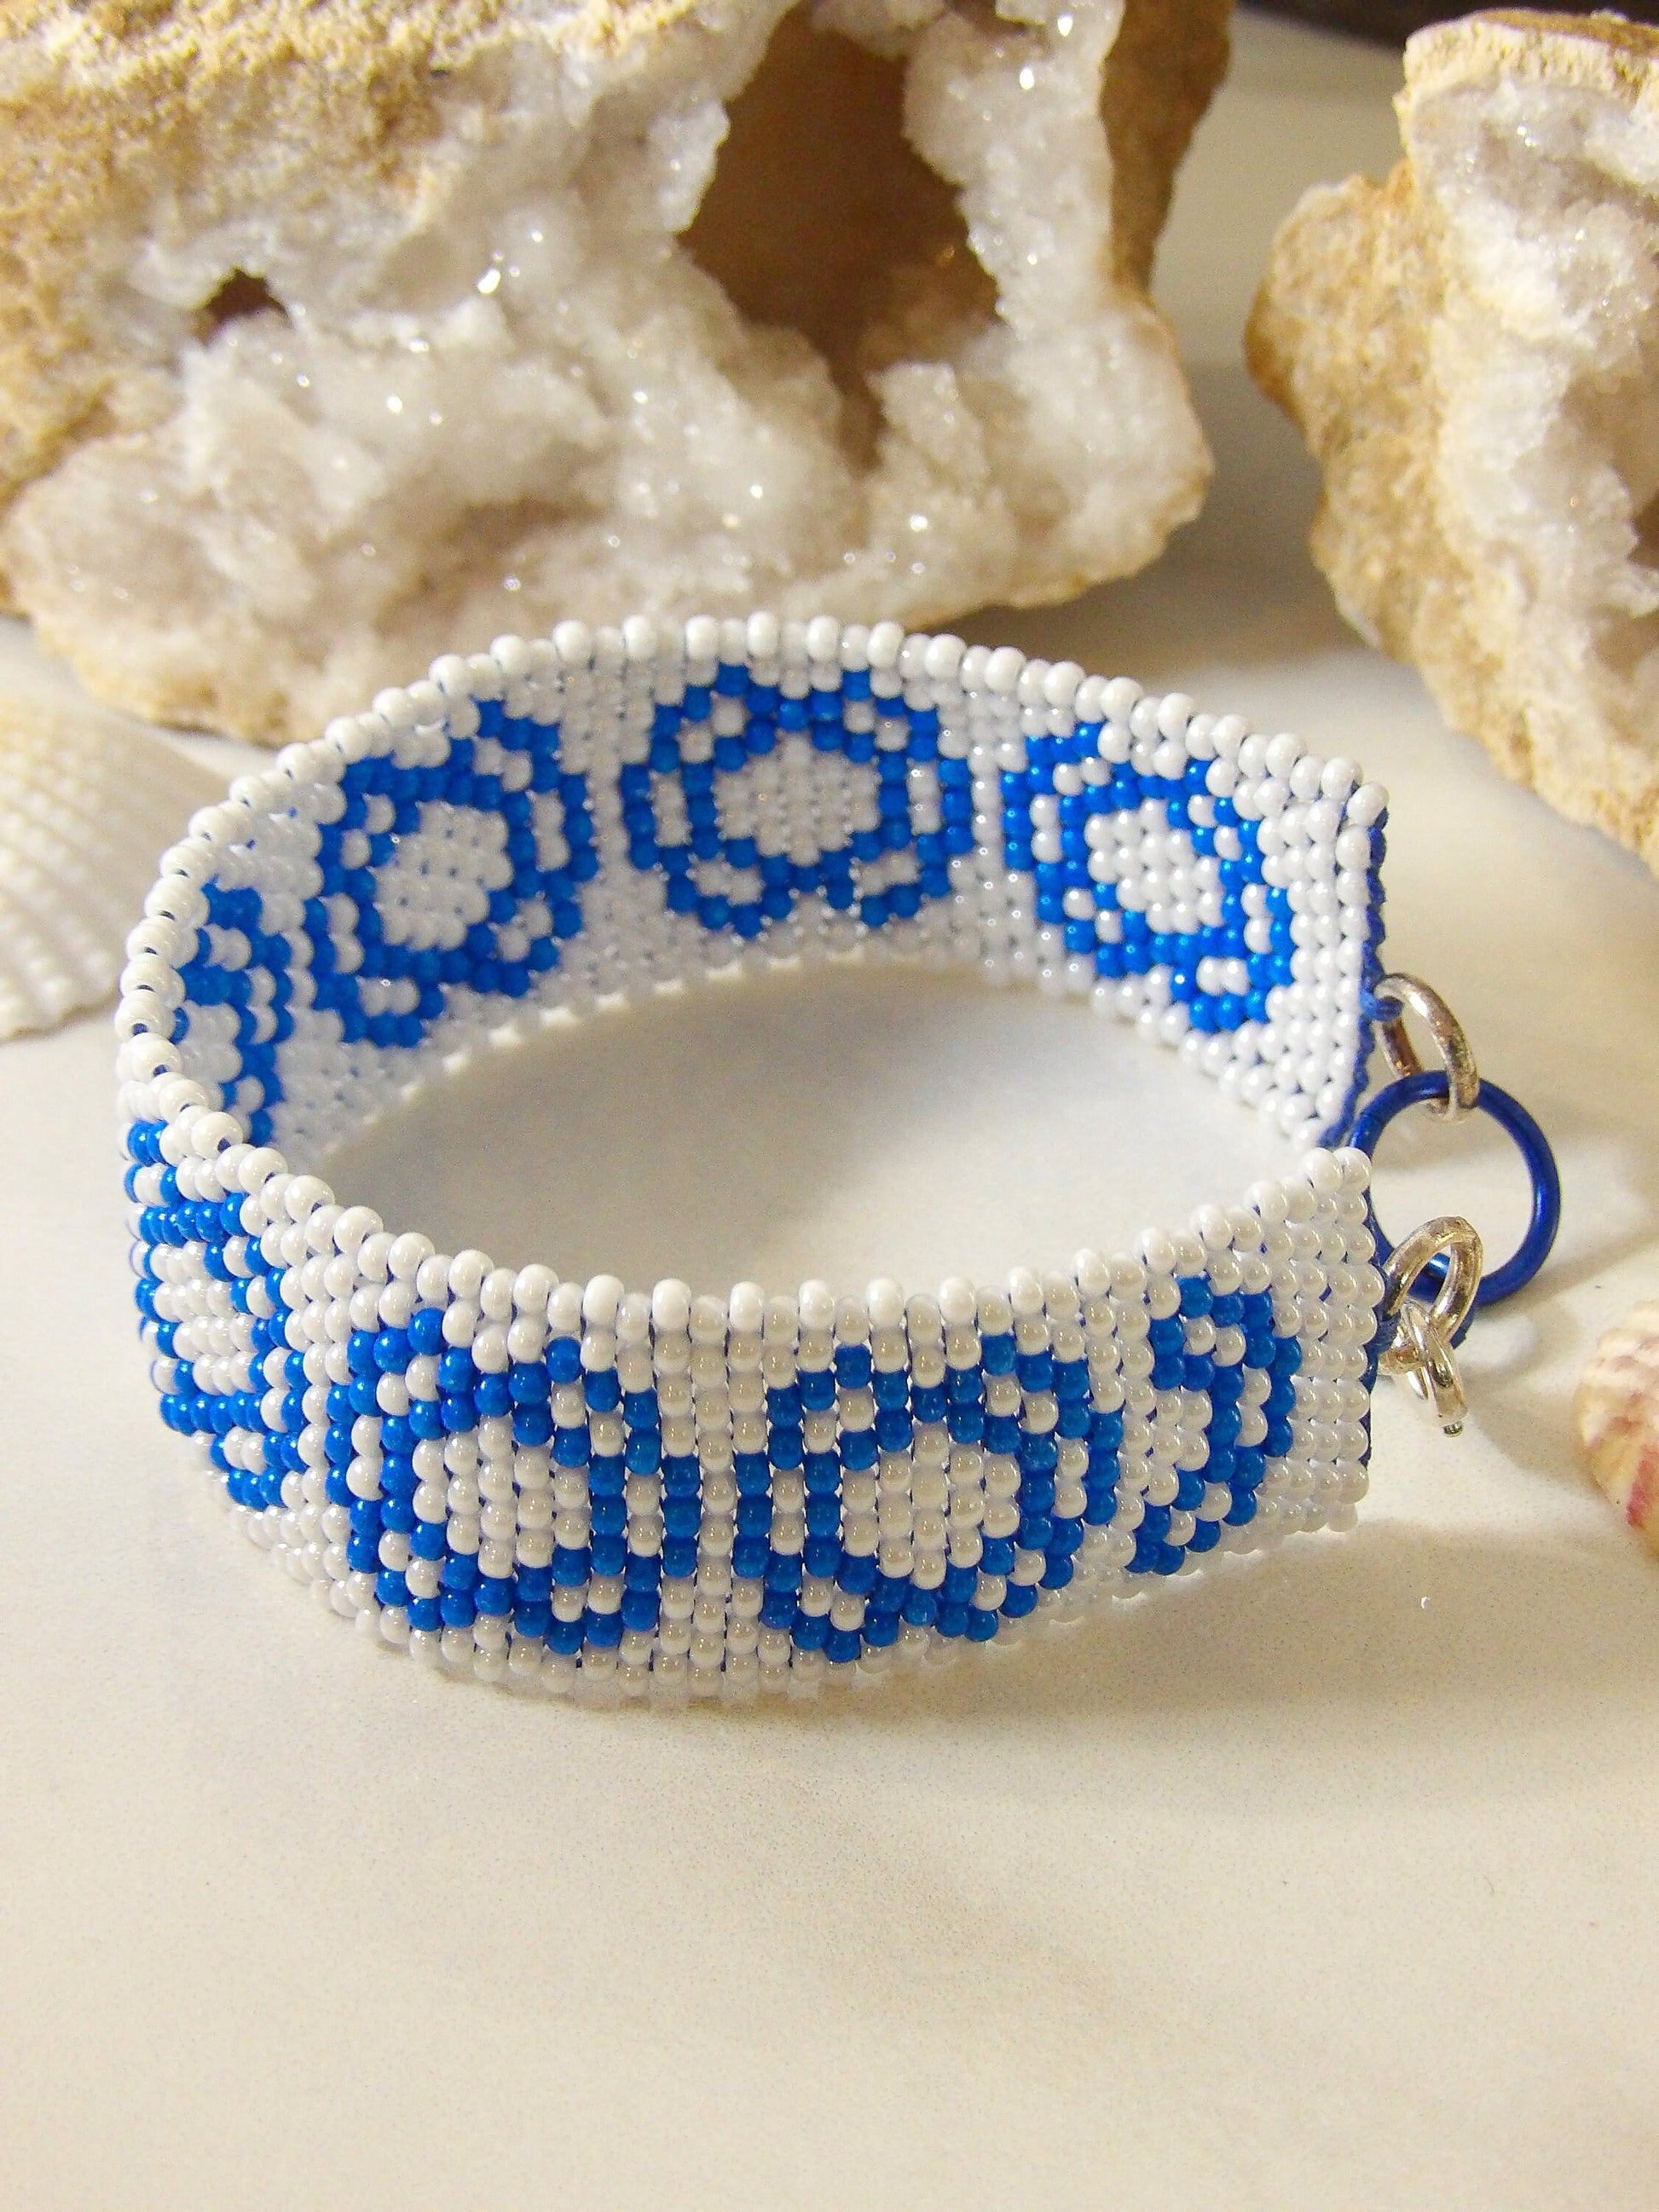 Boho Seed Bead Cuff Bracelet With Blue Folk Flowers | Handwoven Beadwork | Handmade Bohemian Jewelry | Artisan Jewelry Made In USA